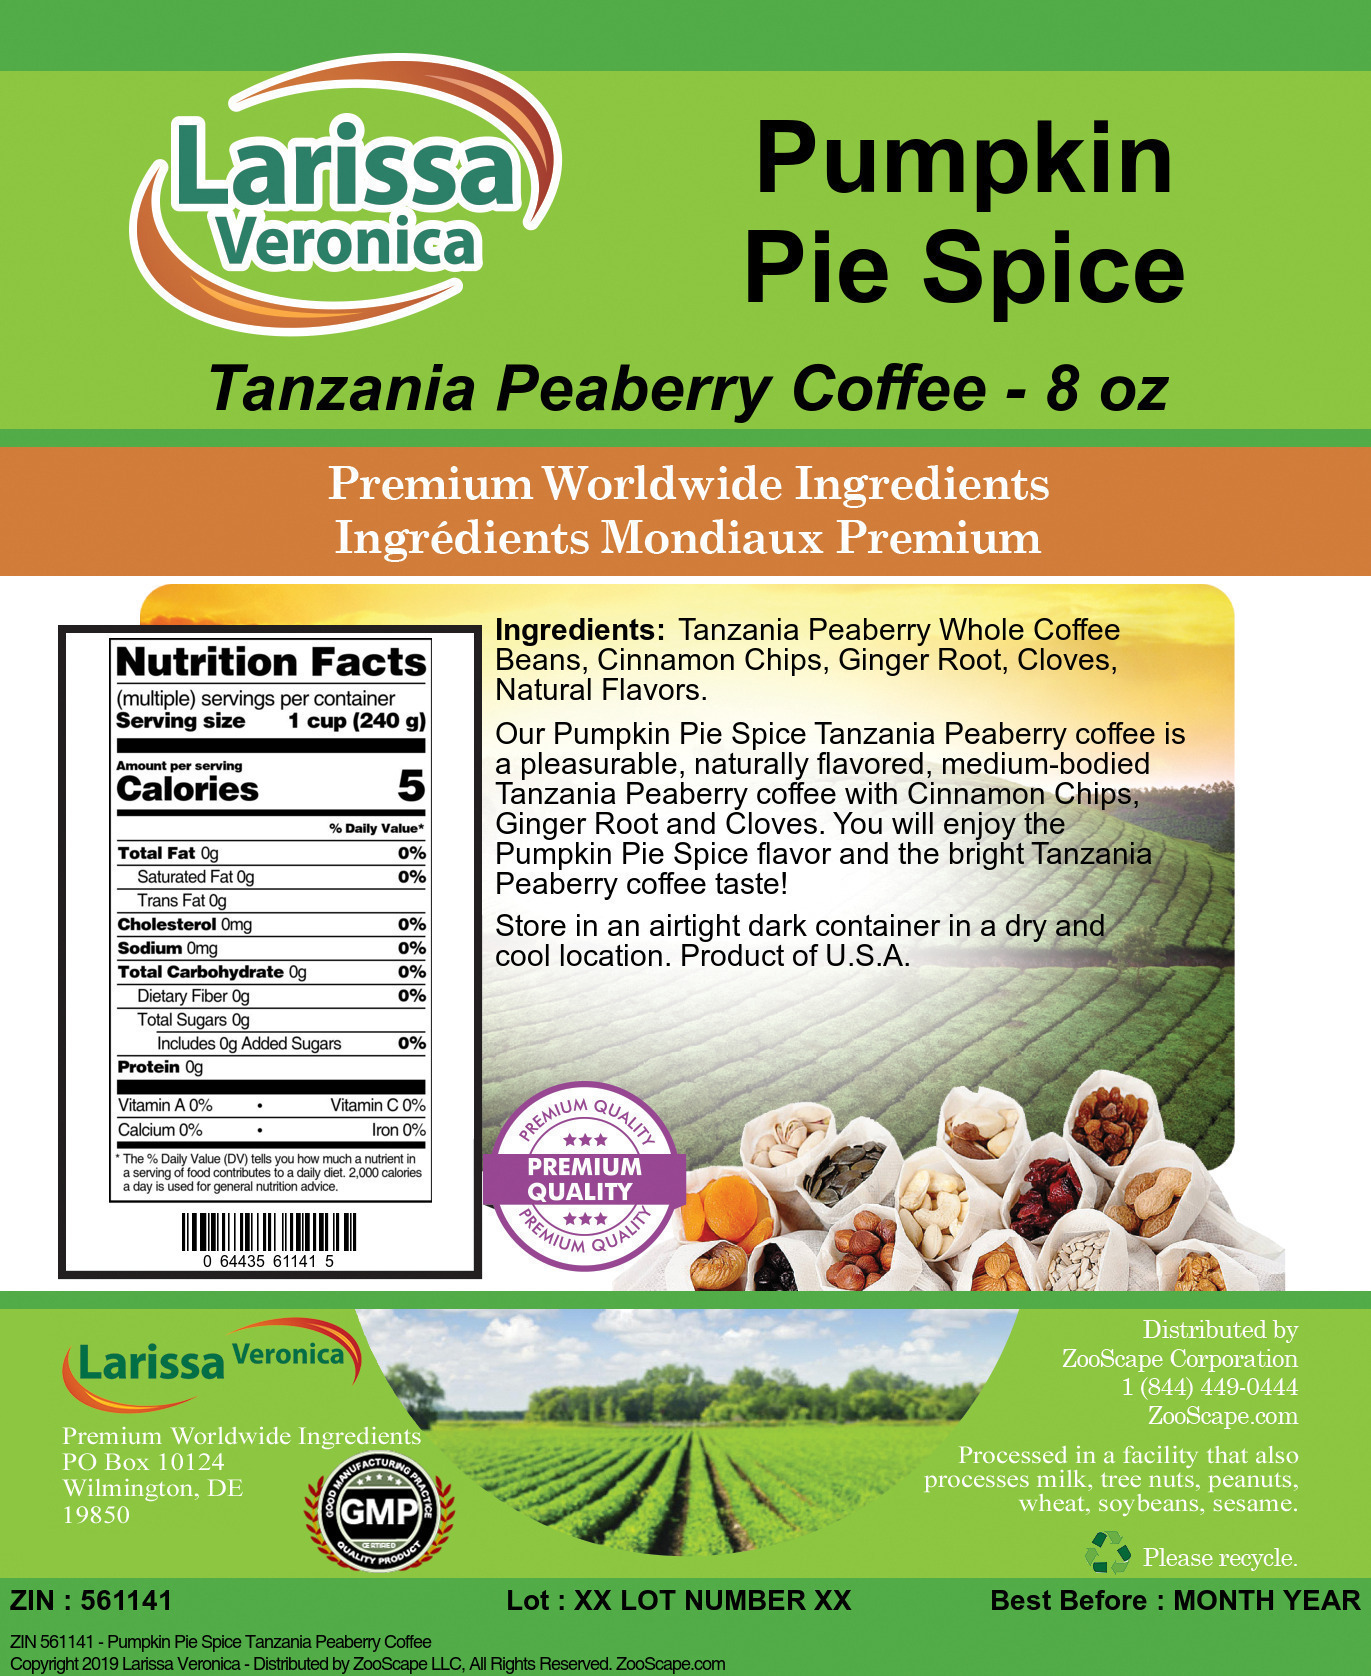 Pumpkin Pie Spice Tanzania Peaberry Coffee - Label